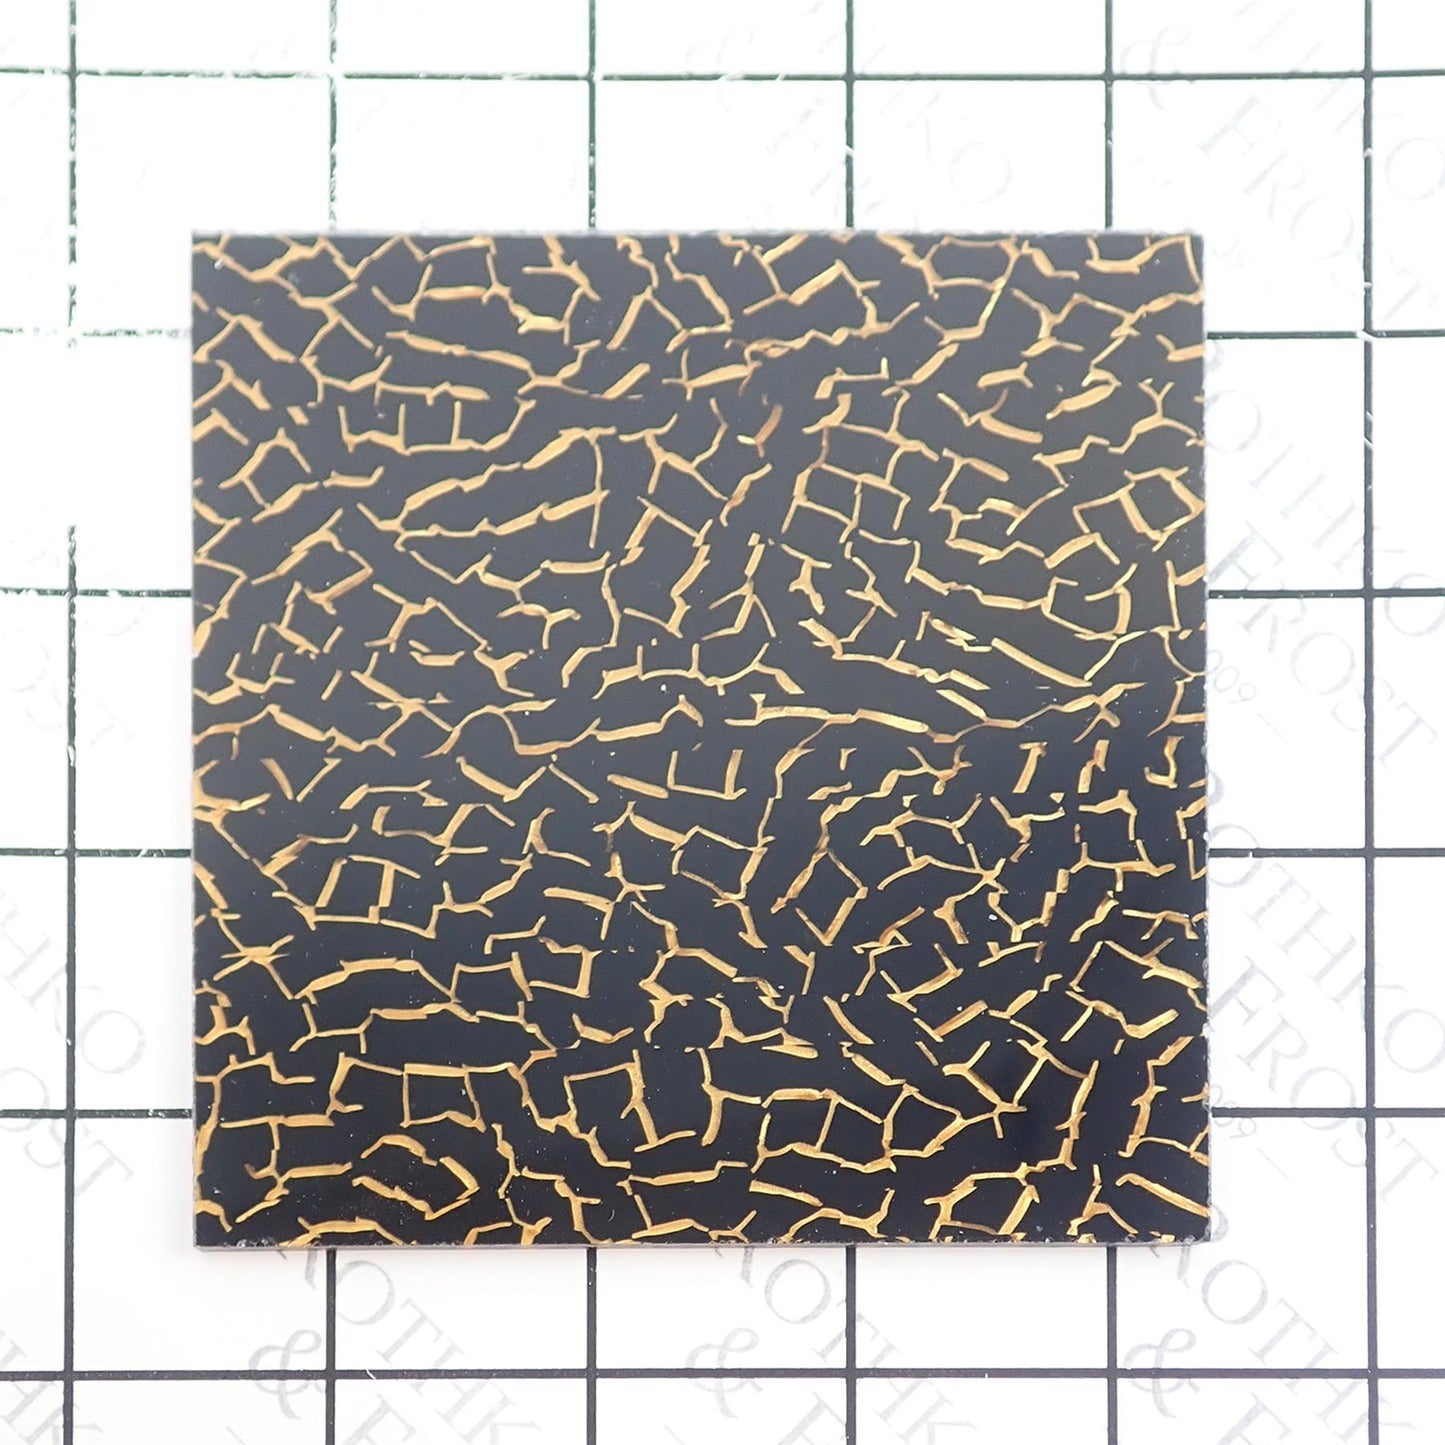 Incudo Black Crackle Celluloid Laminate Acrylic Sheet - 400x300x3mm (15.7x11.81x0.12")